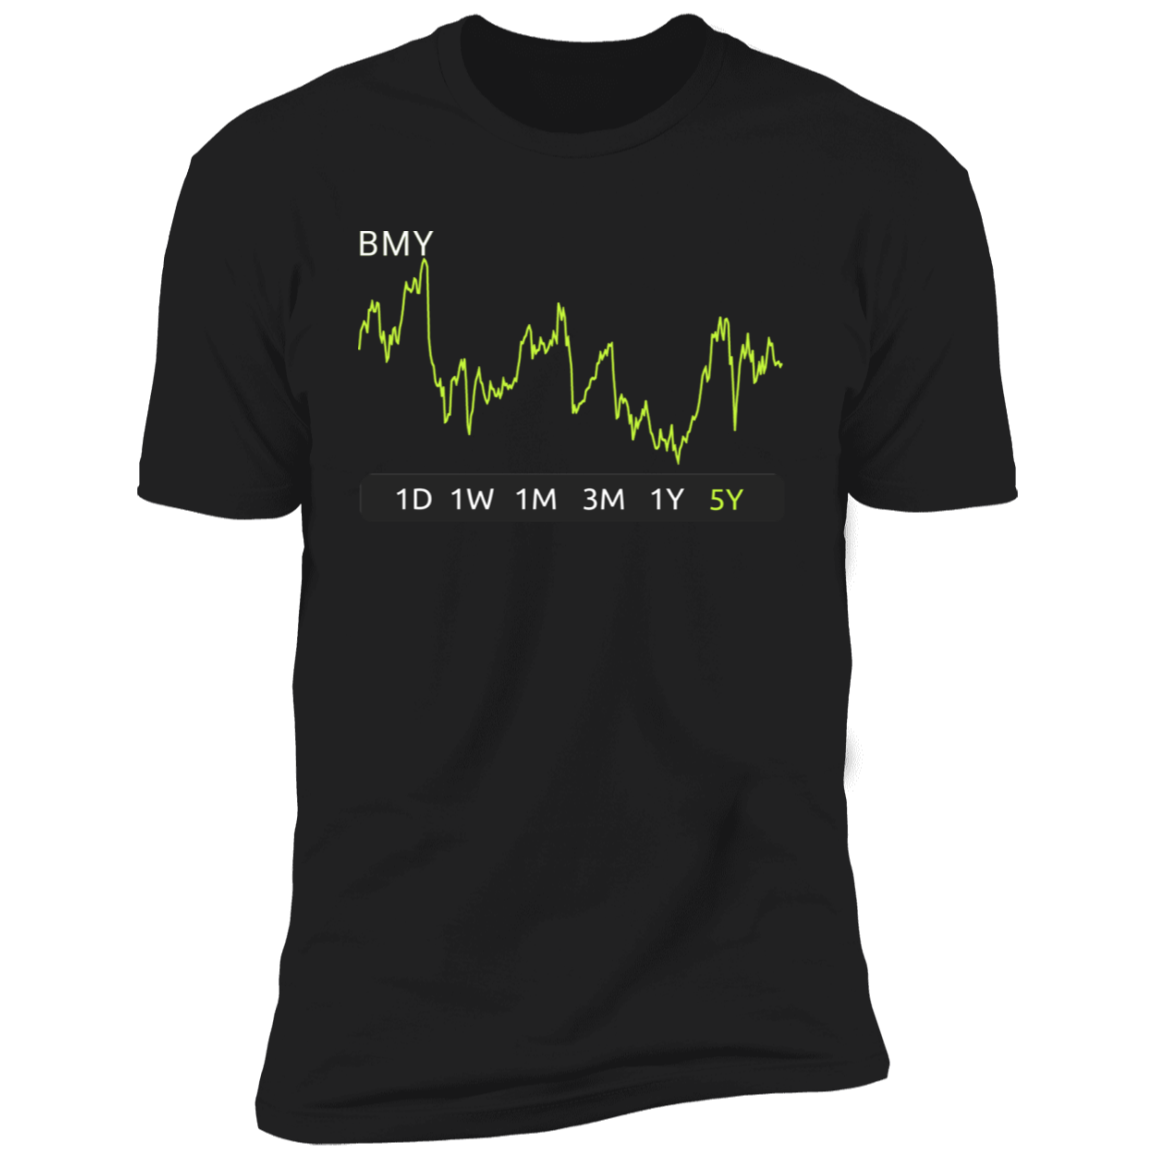 BMY Stock 5y Premium T-Shirt